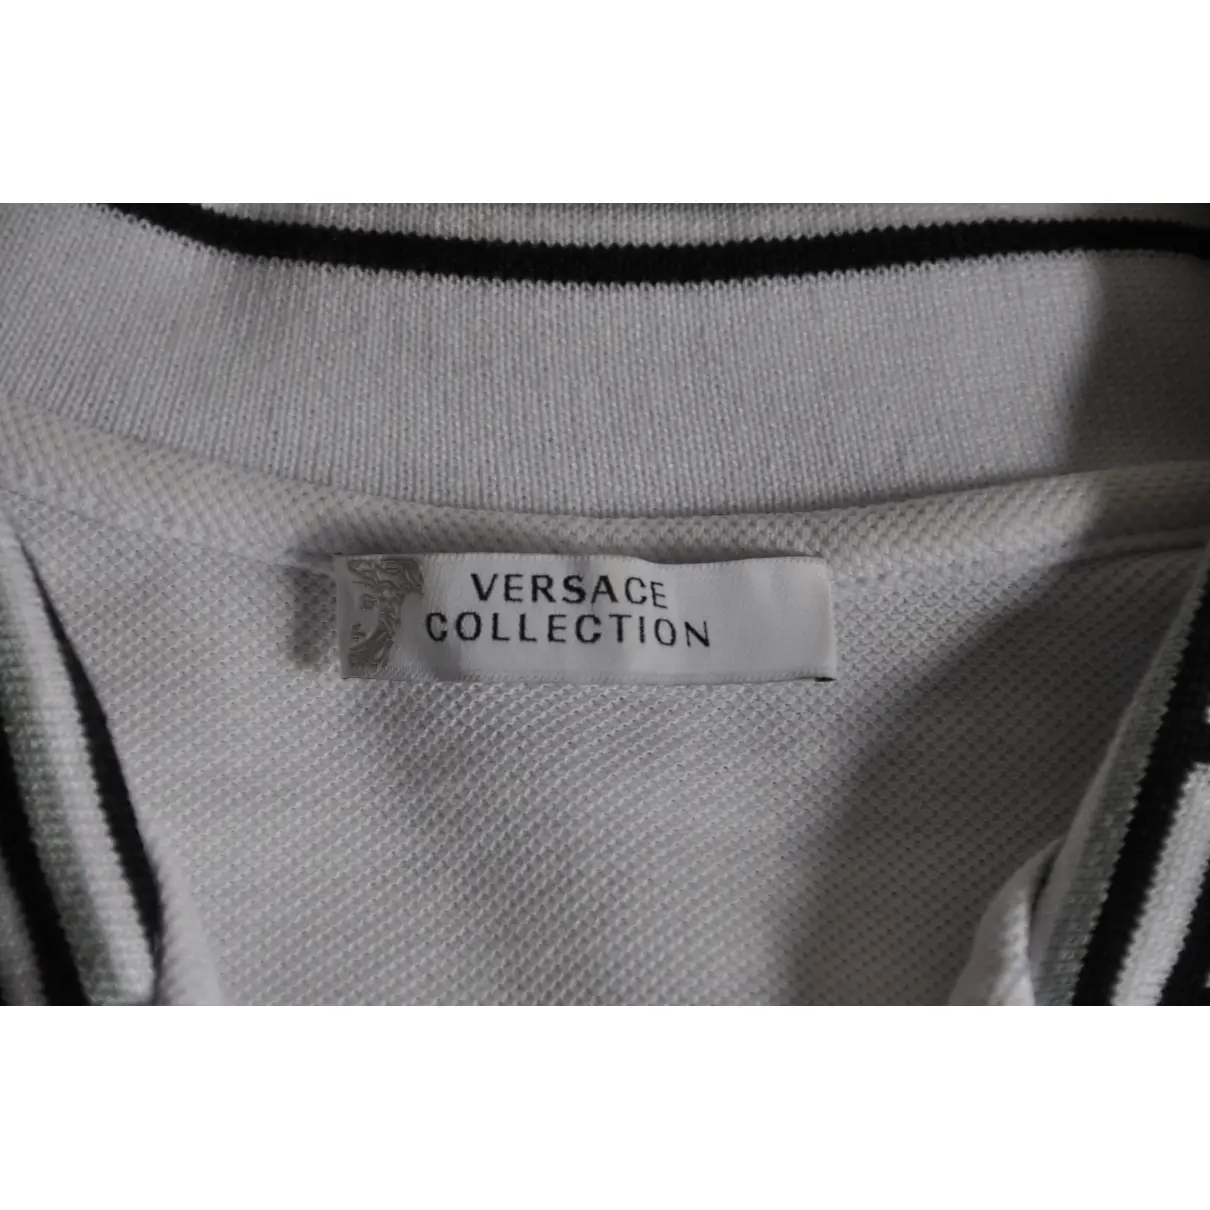 Buy Versace Polo shirt online